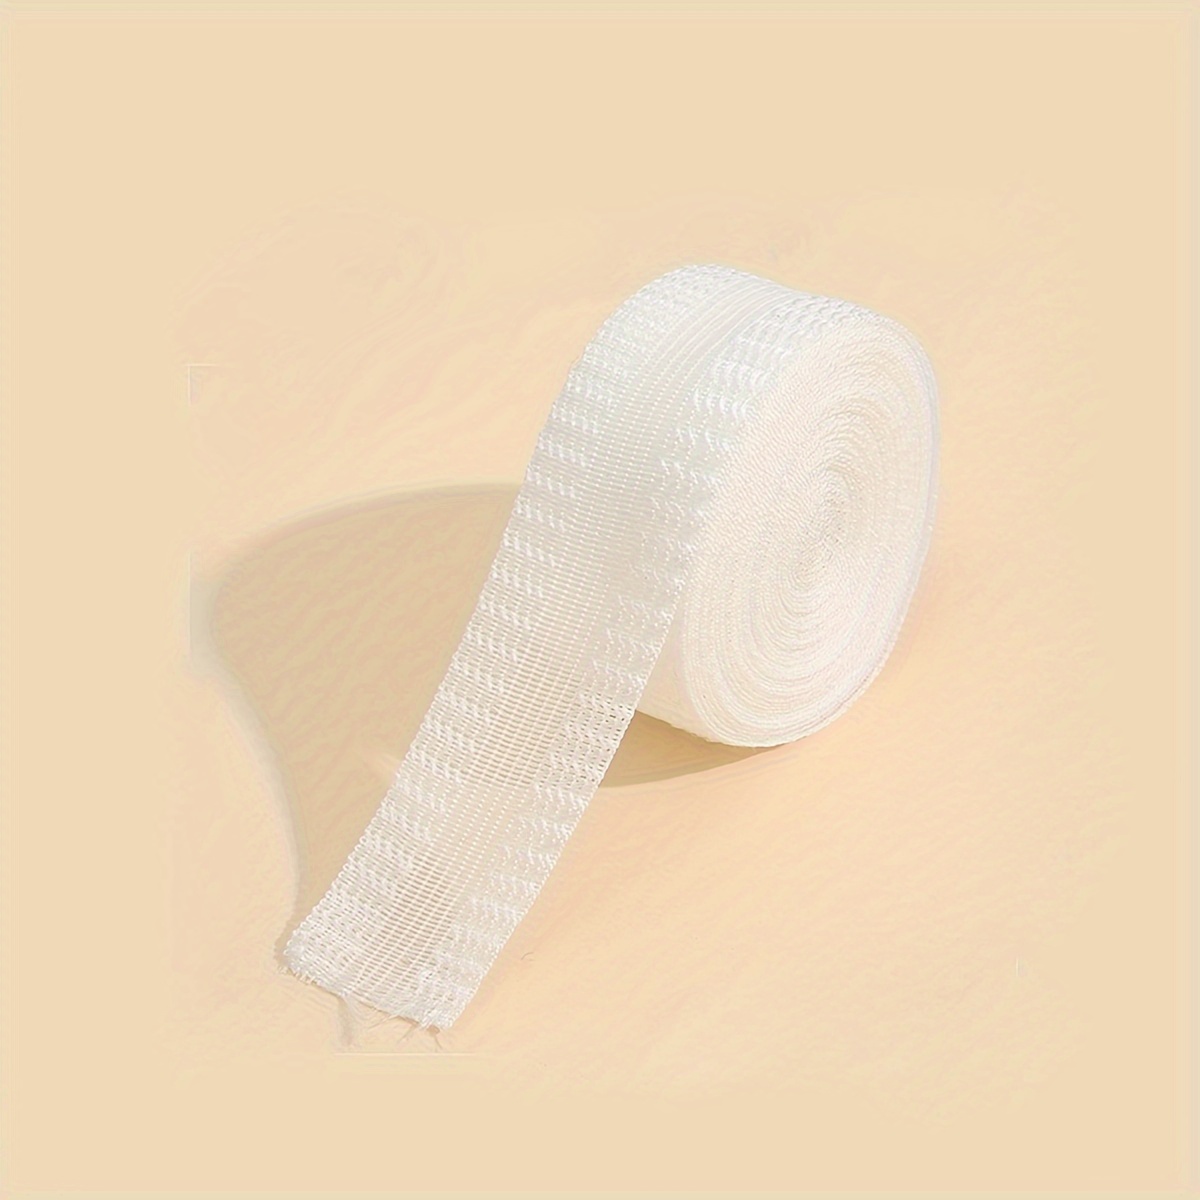 Pants Edge Shorten Self-Adhesive Tape 2.2 Yard Hem Tape for Pants No Sew  Hemming Tape 